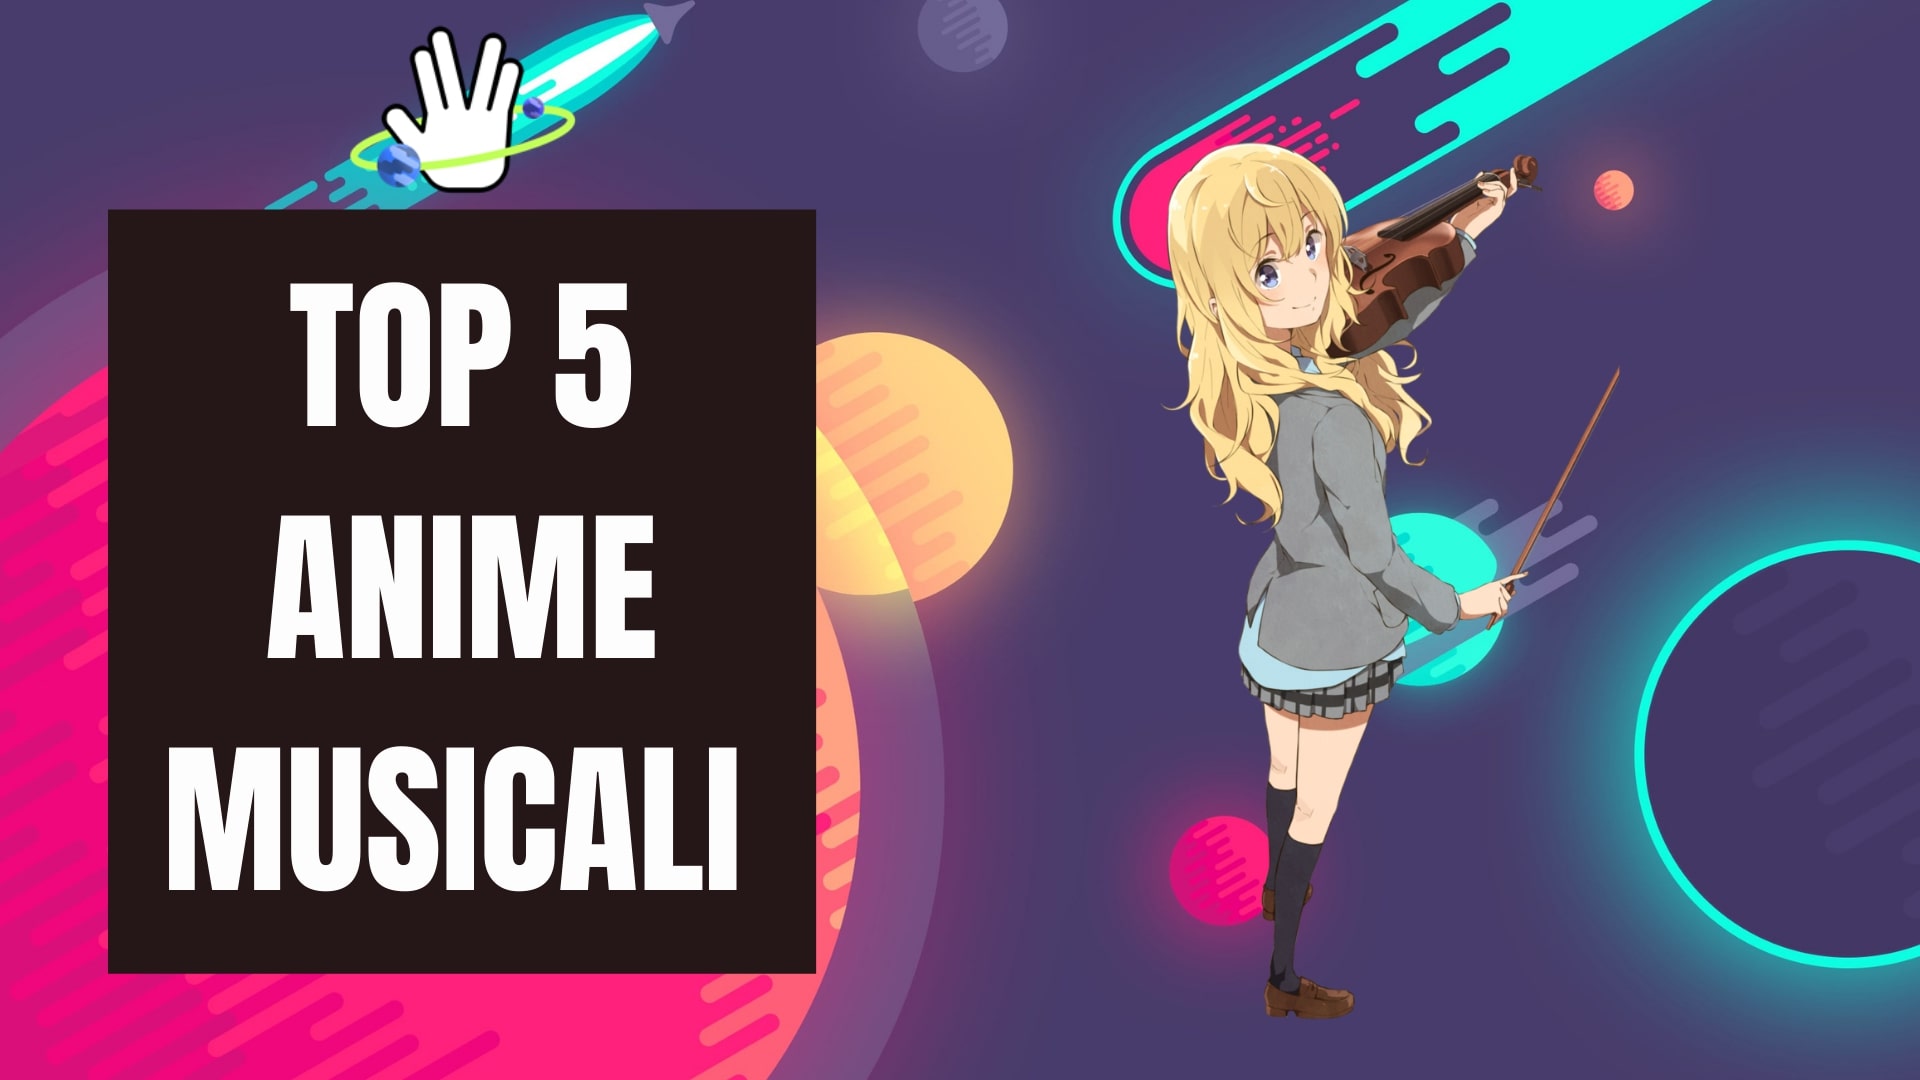 musica e anime top 5 anime musicali